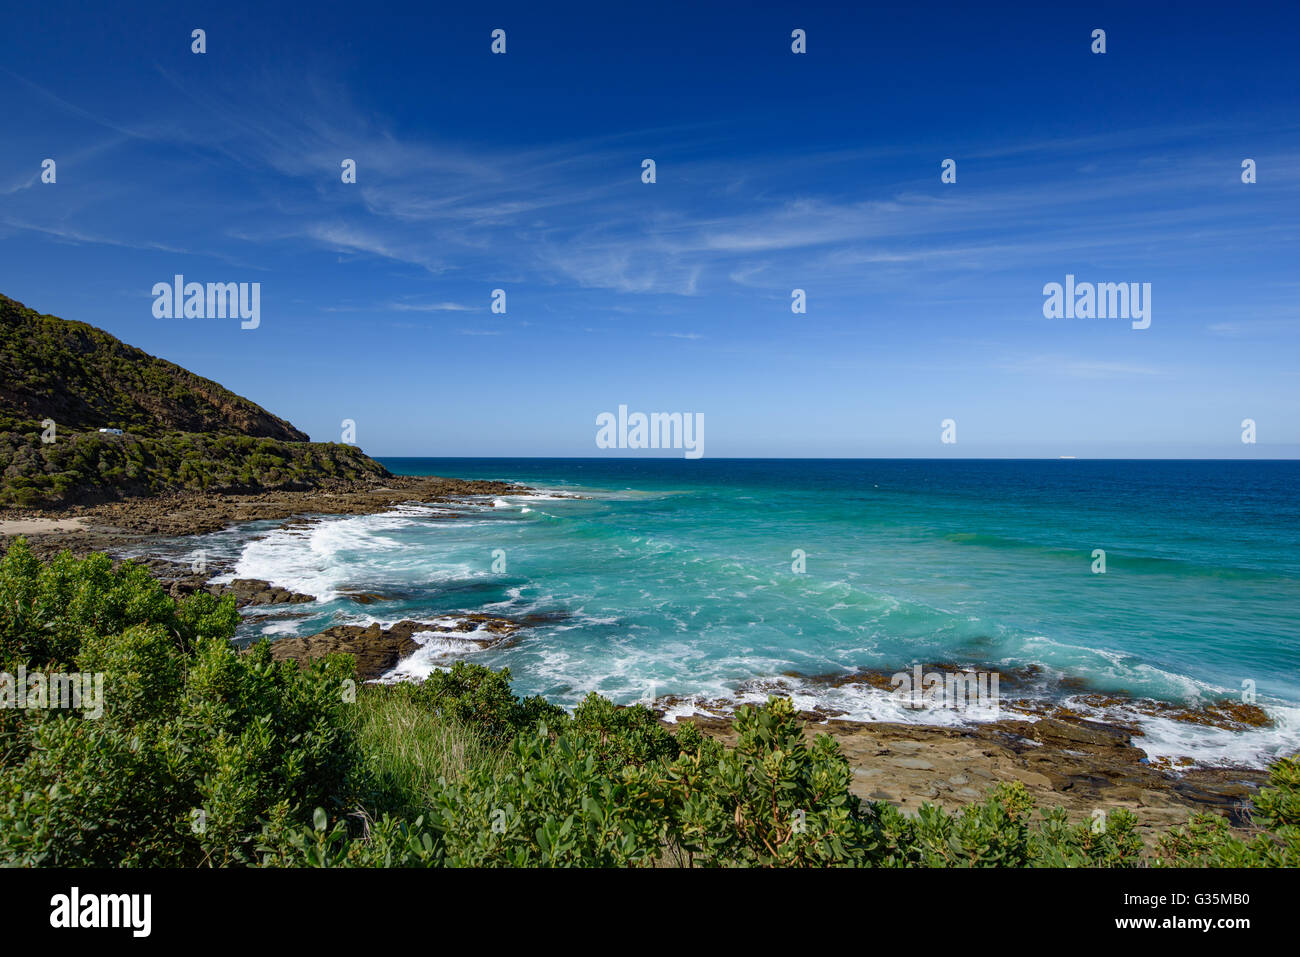 Sea coast view of Great Ocean Road in Australia Stock Photo